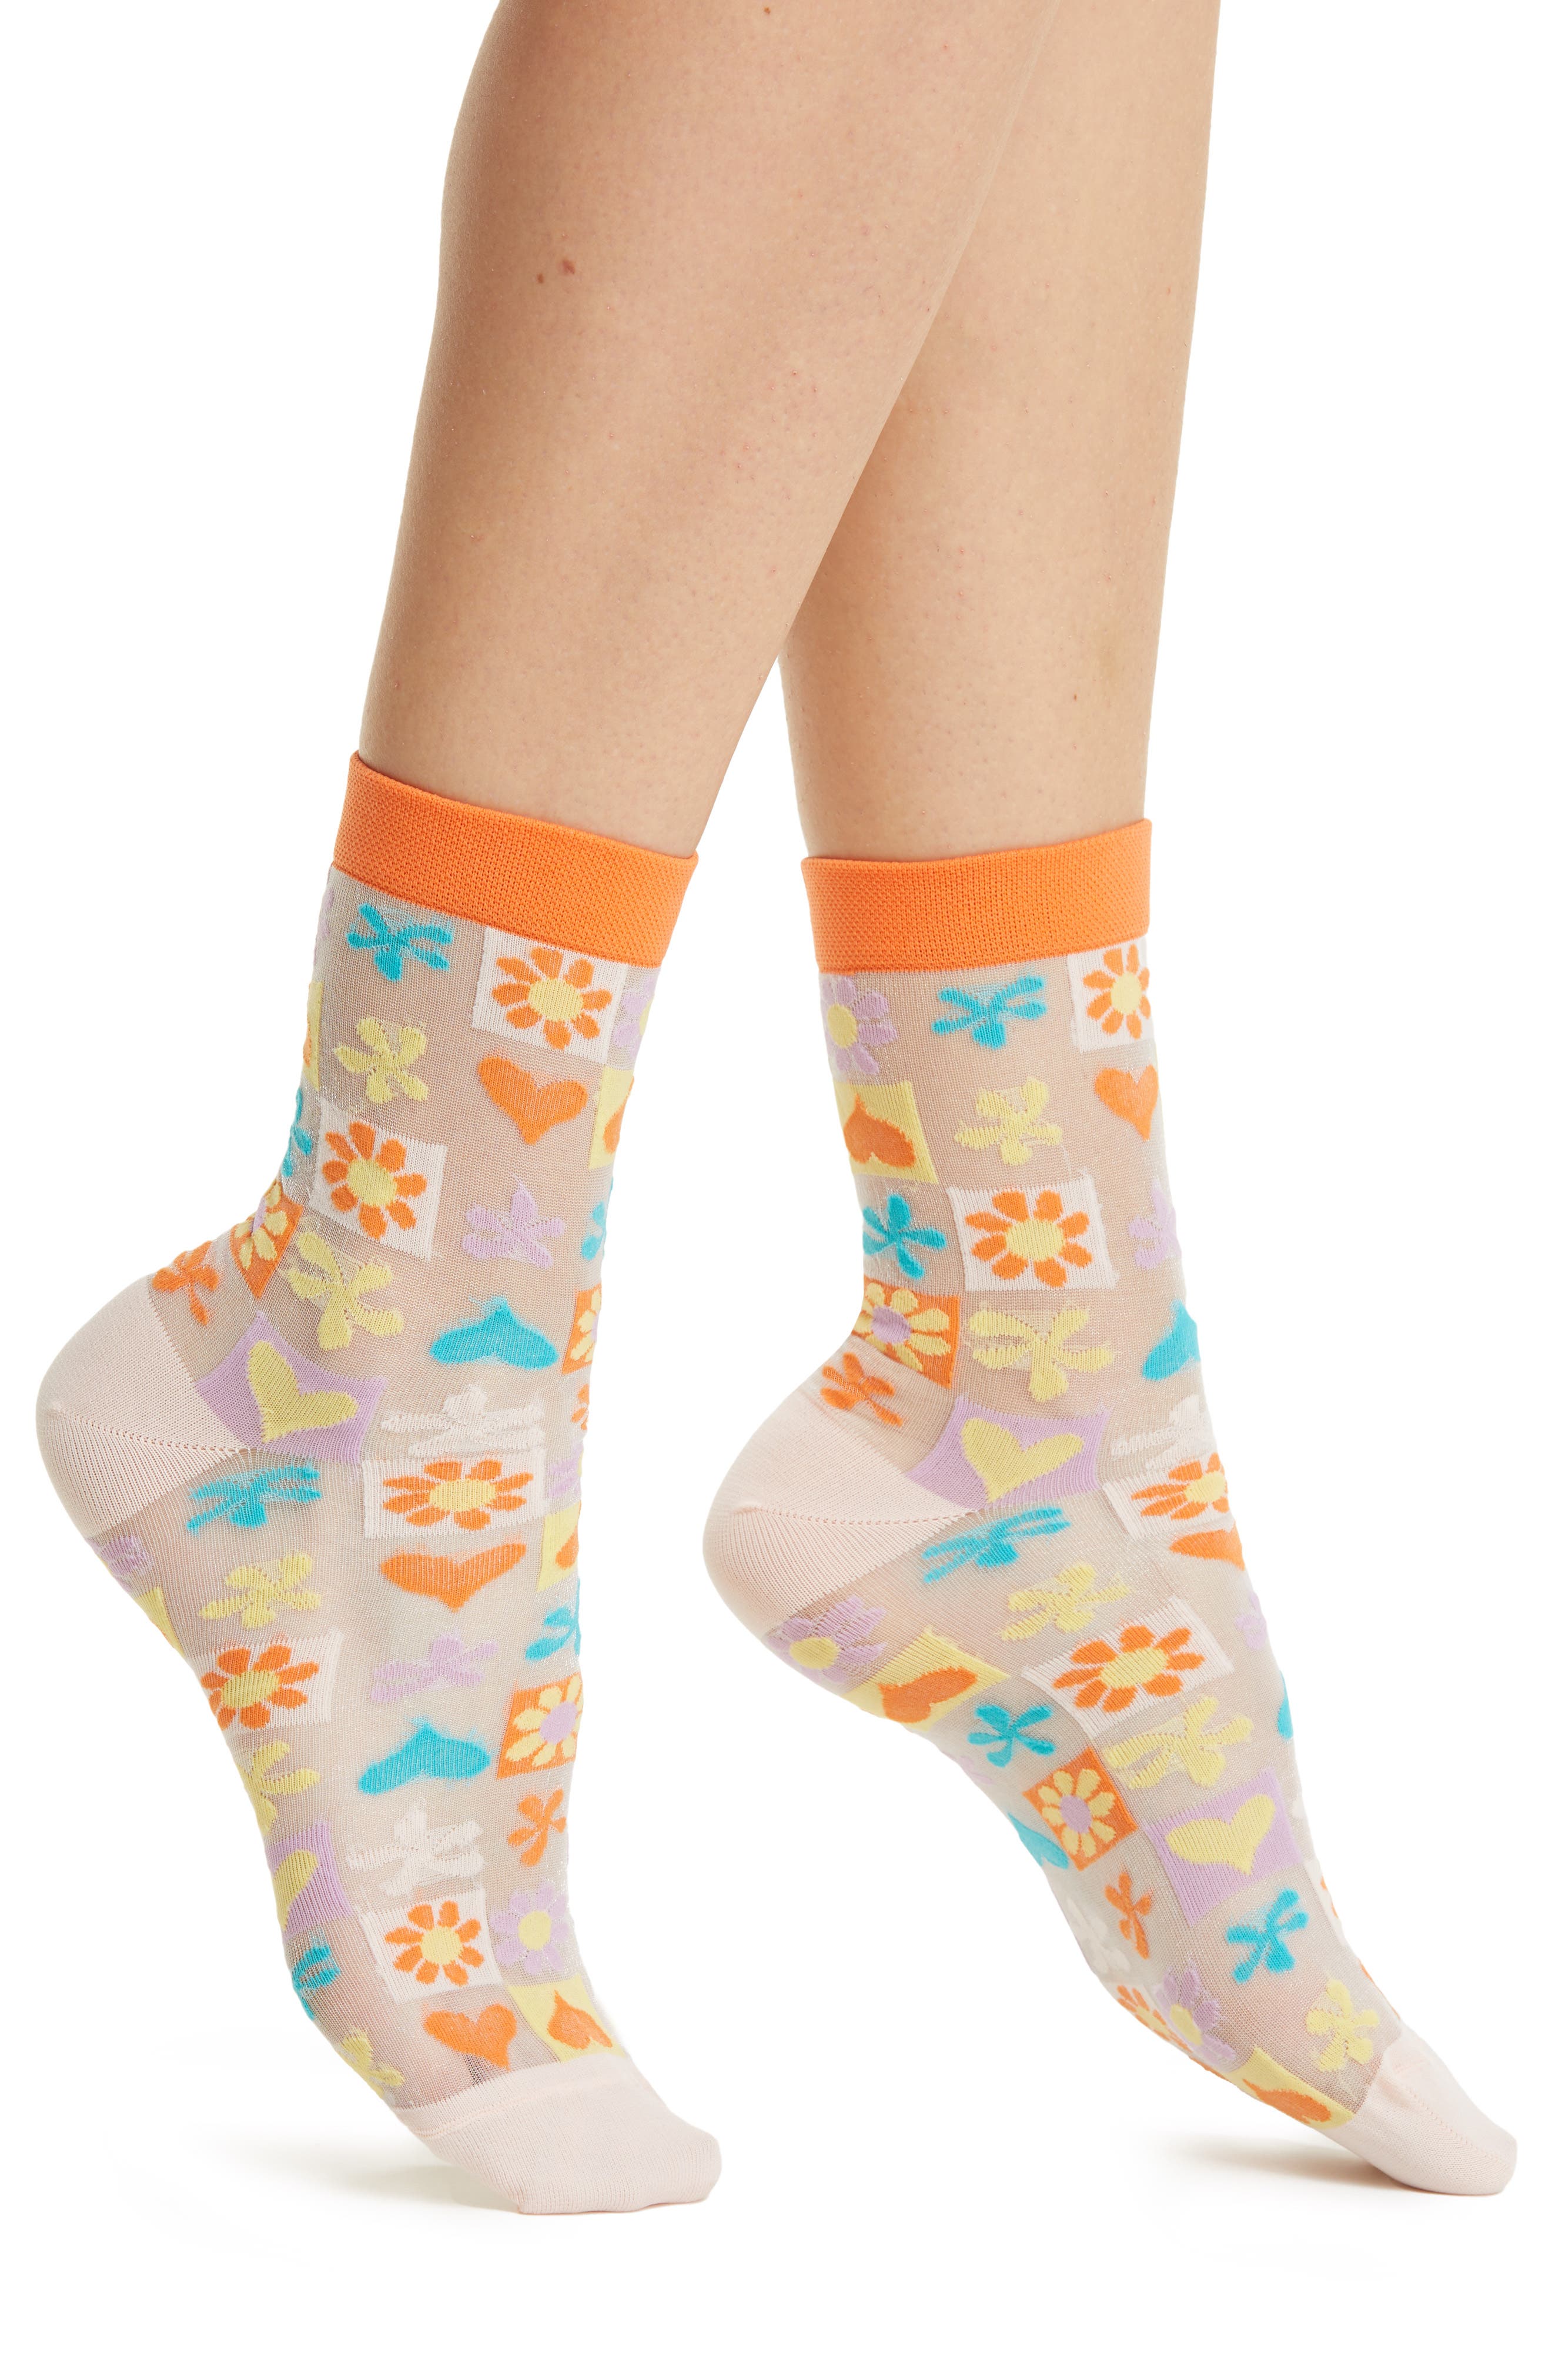 3x 6x Pairs Unisex Athletic/Casual Soft Quarter Ankle Cotton Stretch Socks Sale 